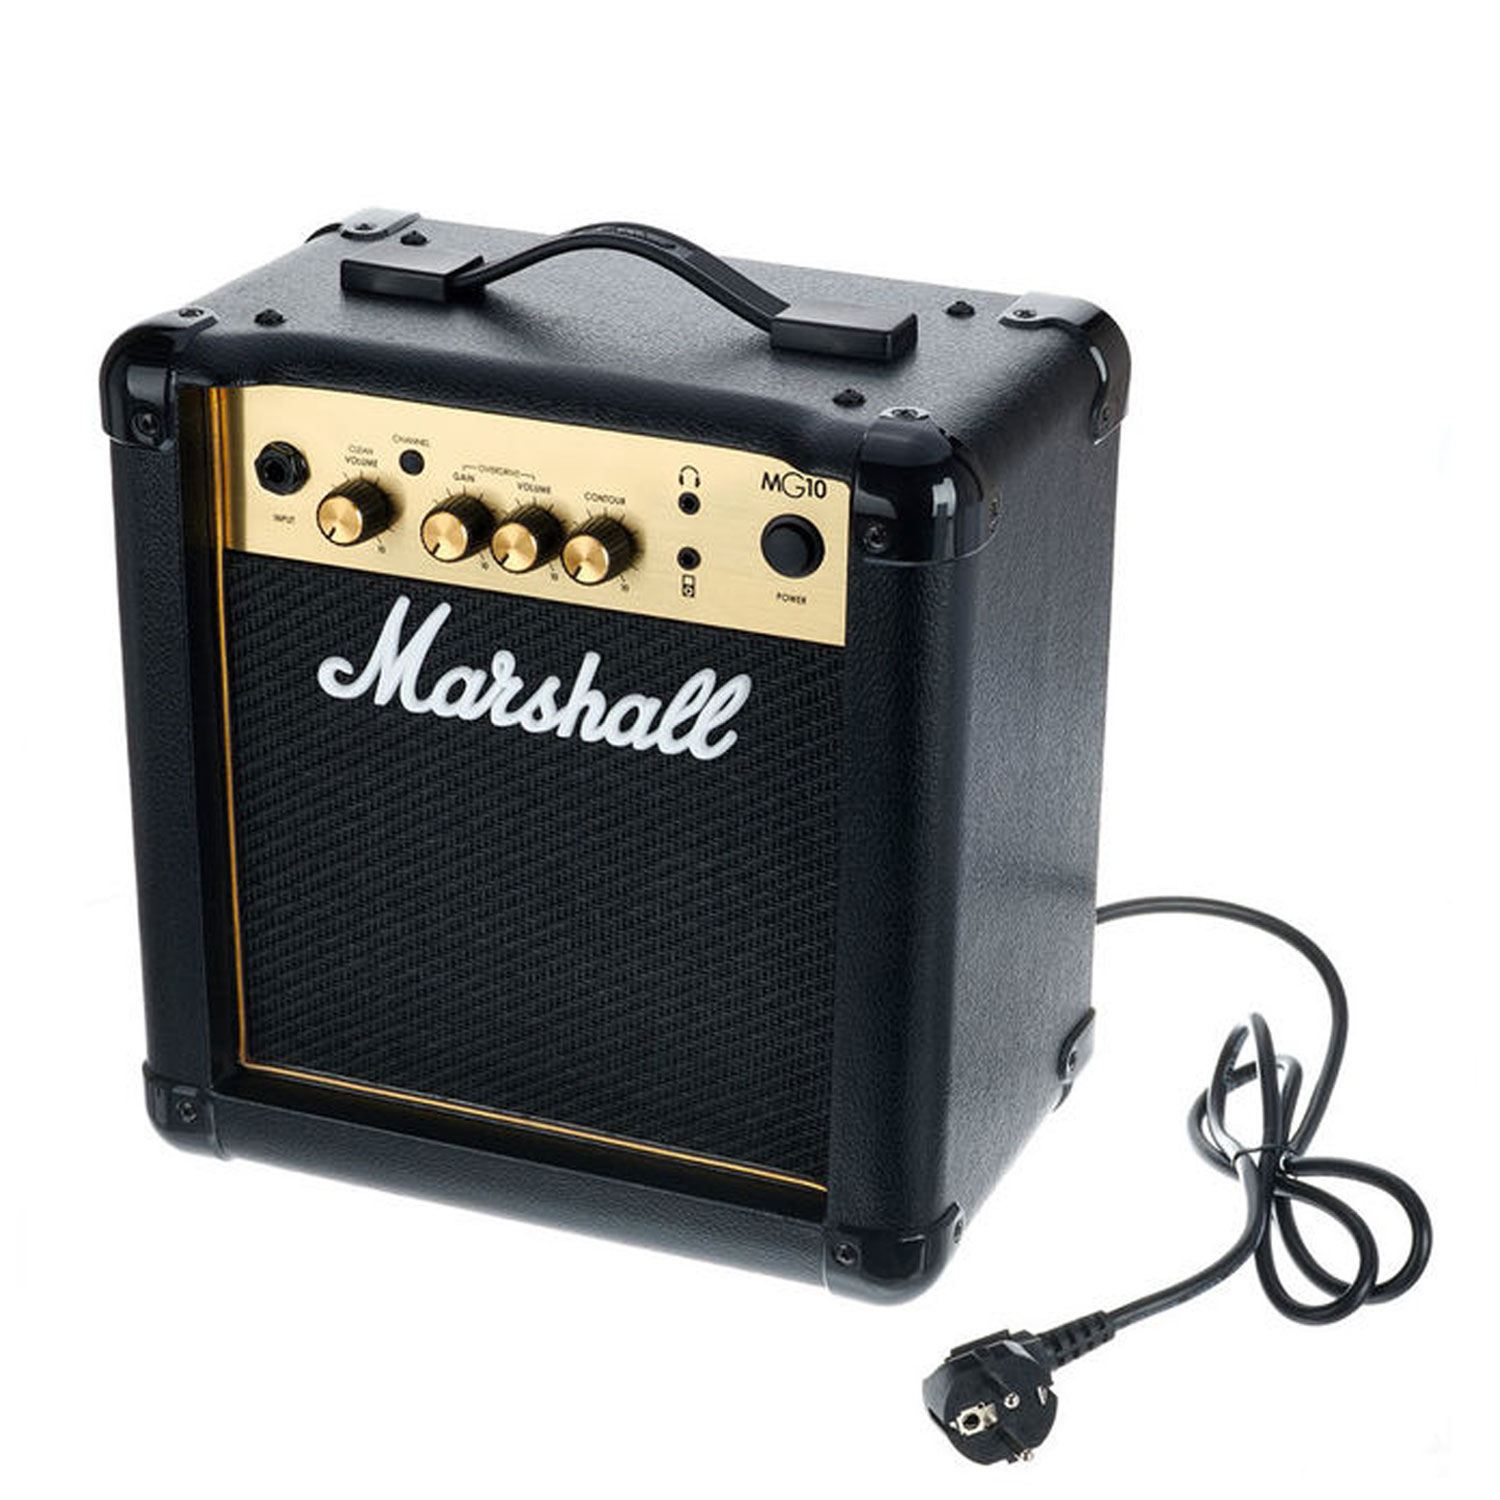 Gia-re-Amply-Marshall-MG10-Gold-Ampli-dan-Guitar-dien-Combo-Amplifier-MG10G-Tiki